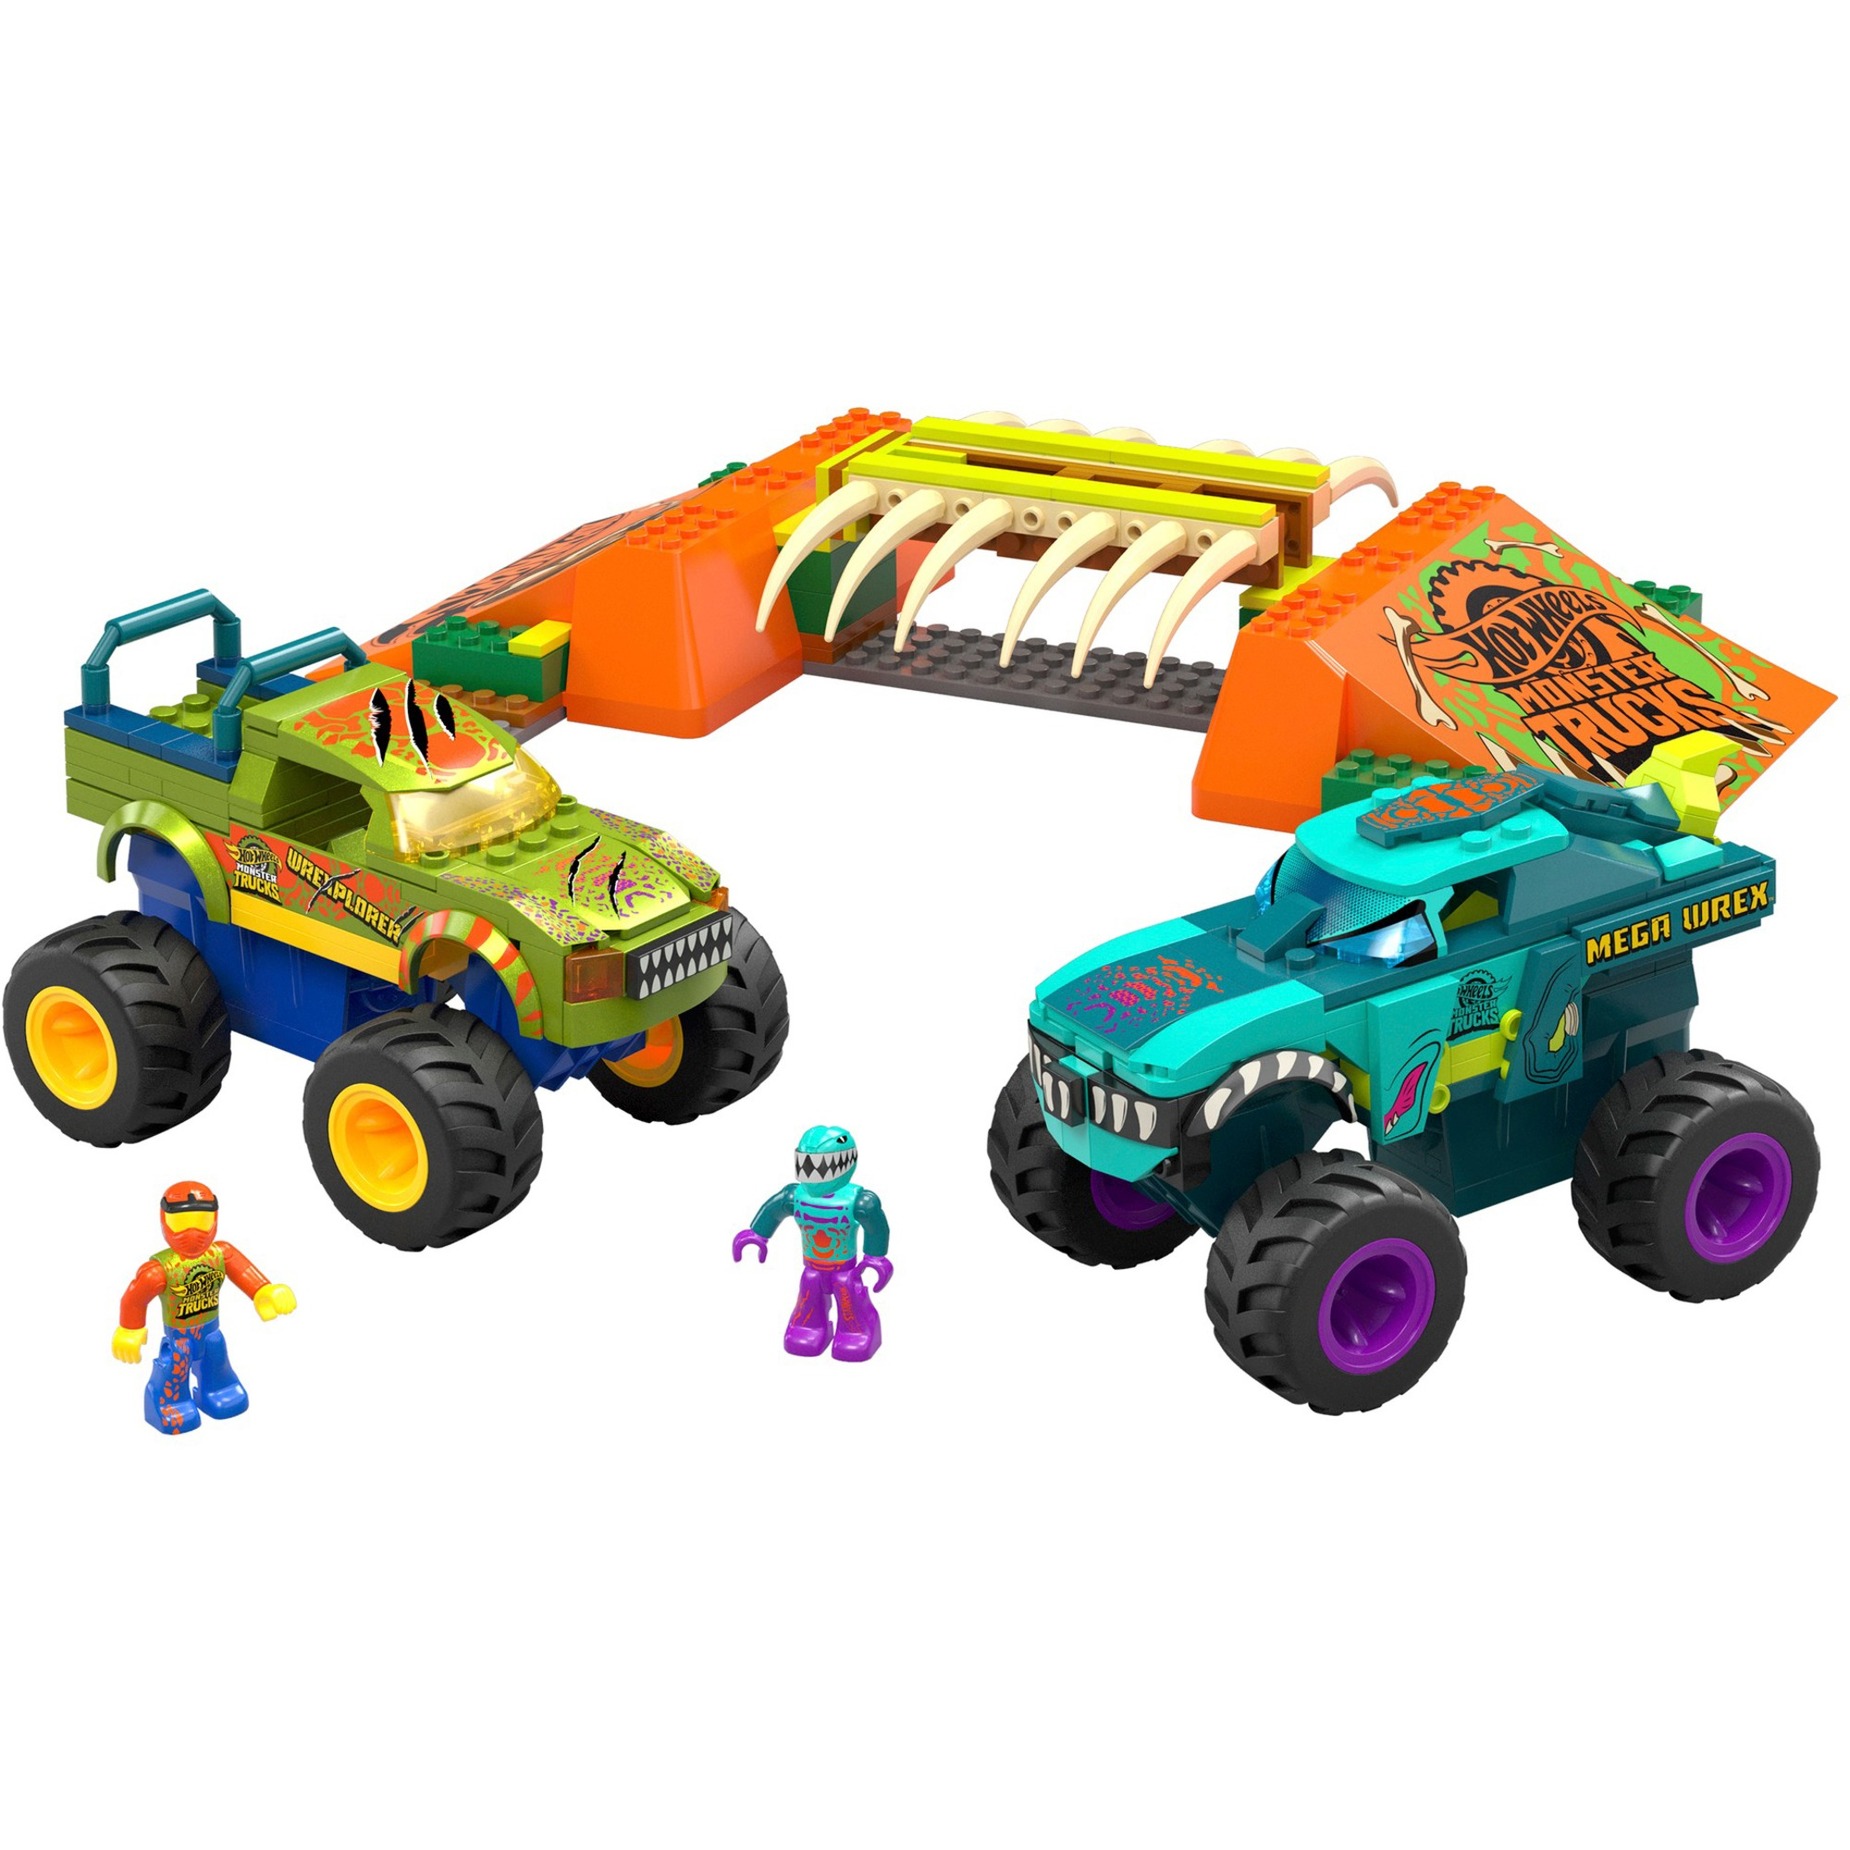 MEGA Hot Wheels Monster Trucks Mega-Wrex Knochen Crash Stuntbahn, Konstruktionsspielzeug von Mattel